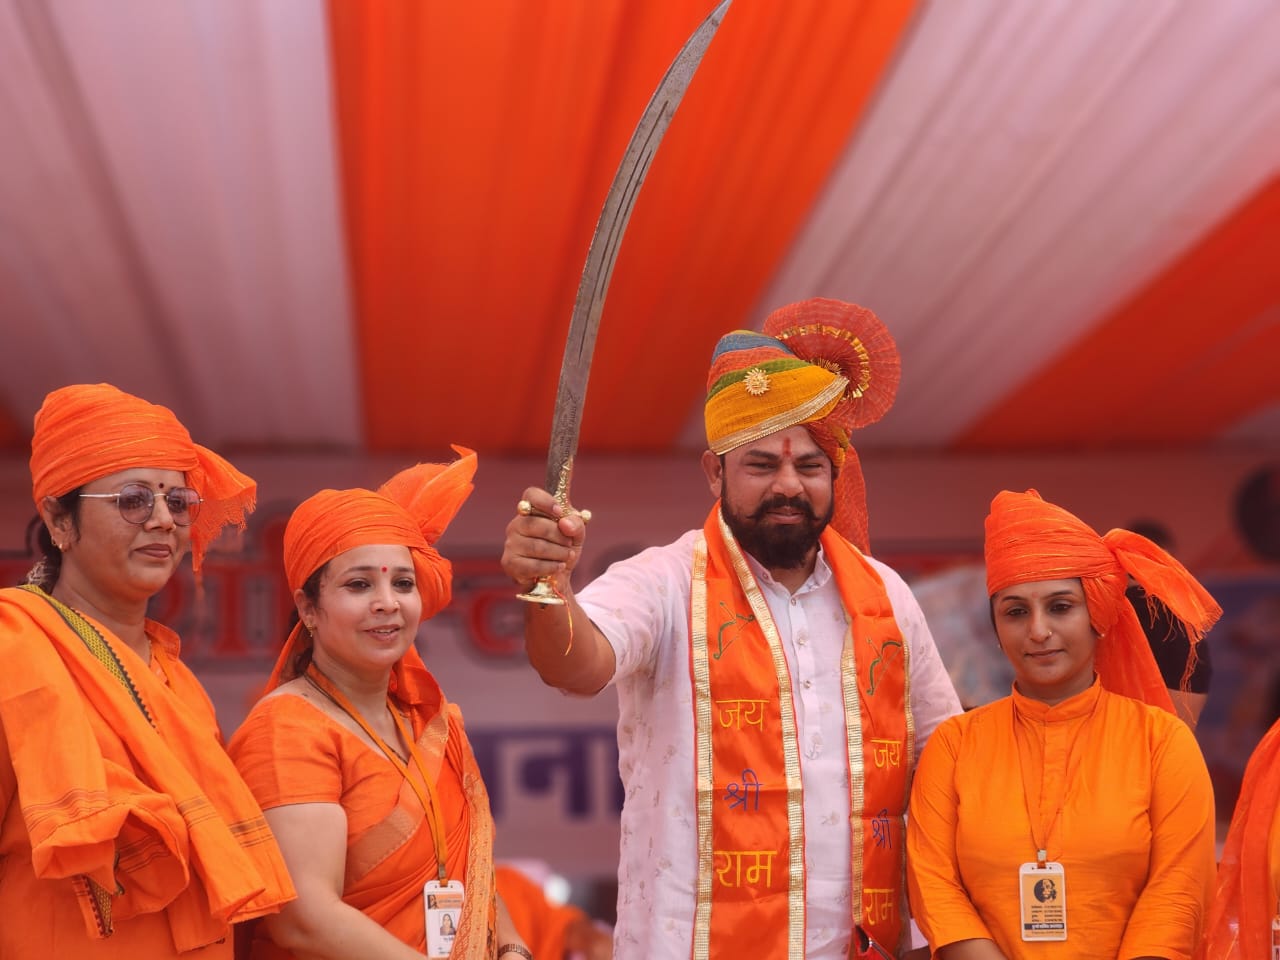 BJP MLA Raja Singh issues warning: Don’t allow non-Hindus into dandiya events; check Aadhaar cards for proof